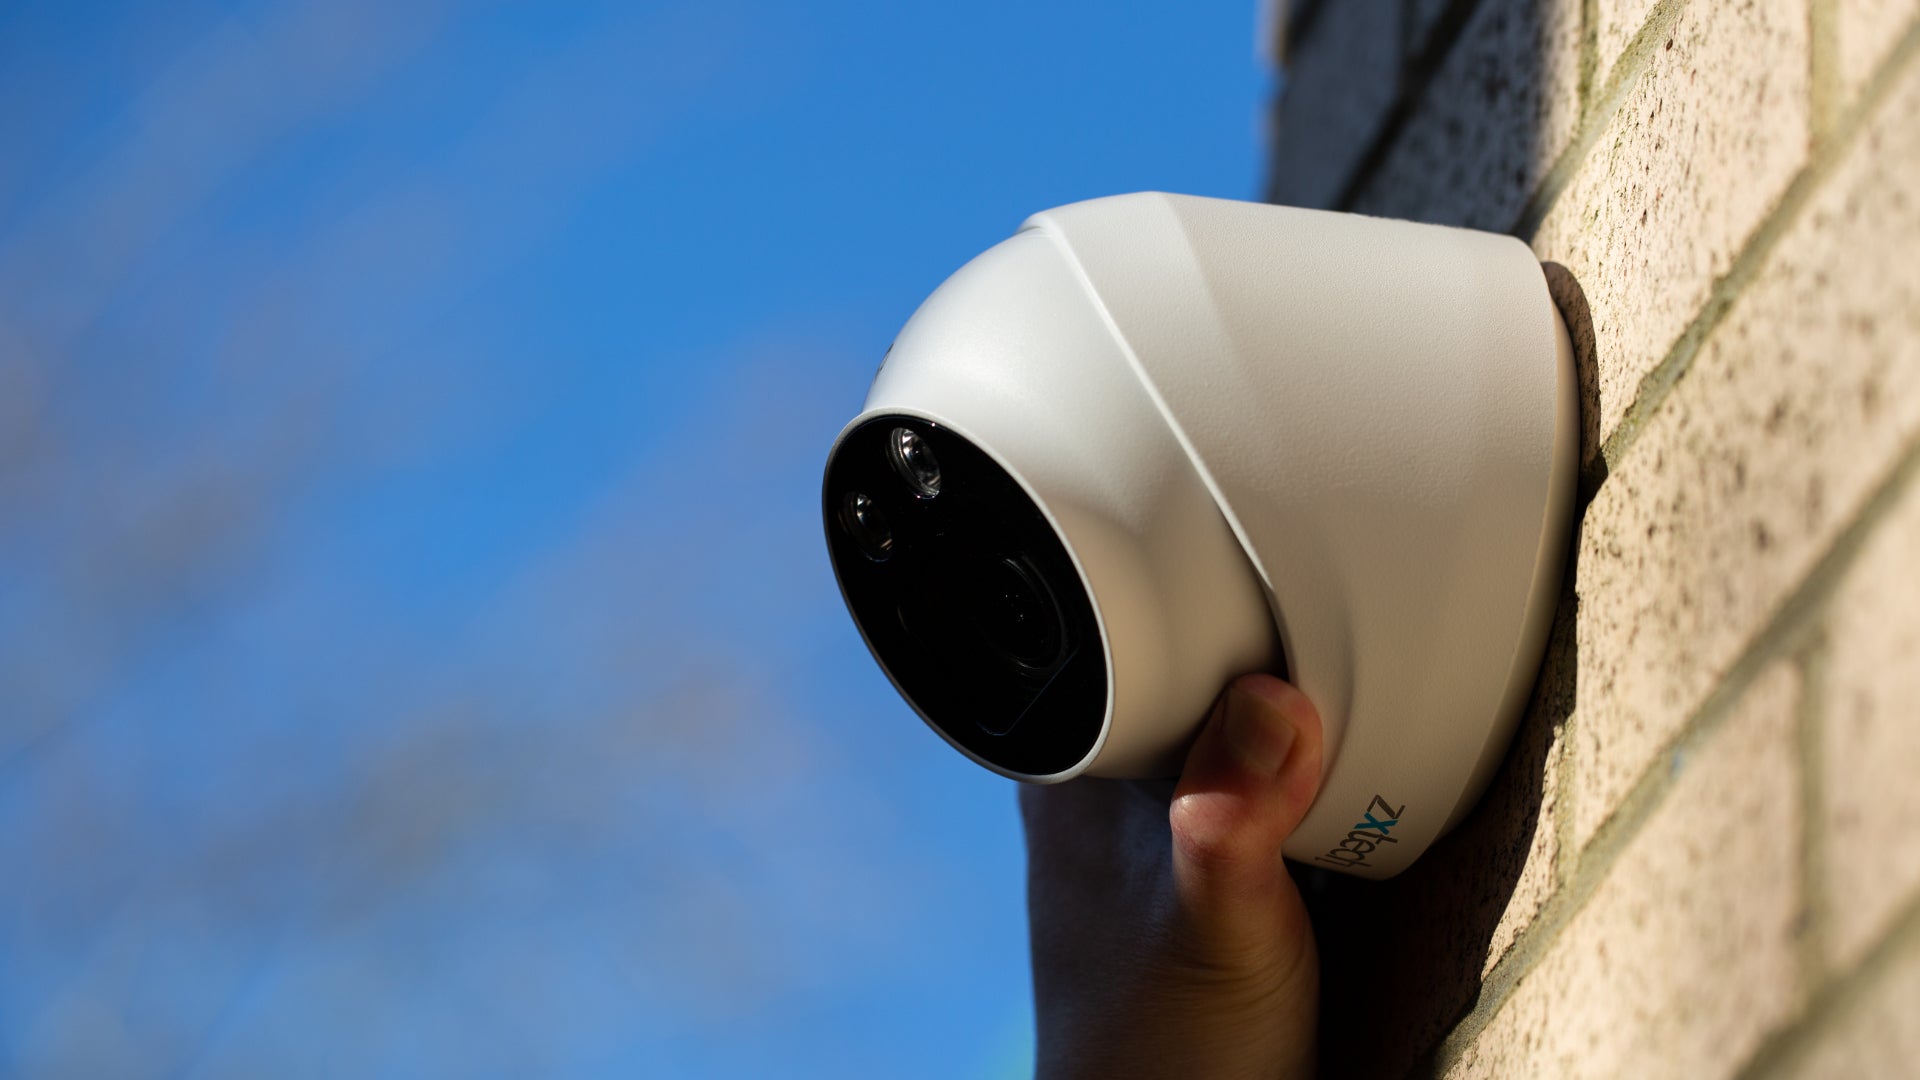 HD 1800TVL 2.8-12mm Varifocal Surveillance CCTV Outdoor 9bvc6 Security Camera 